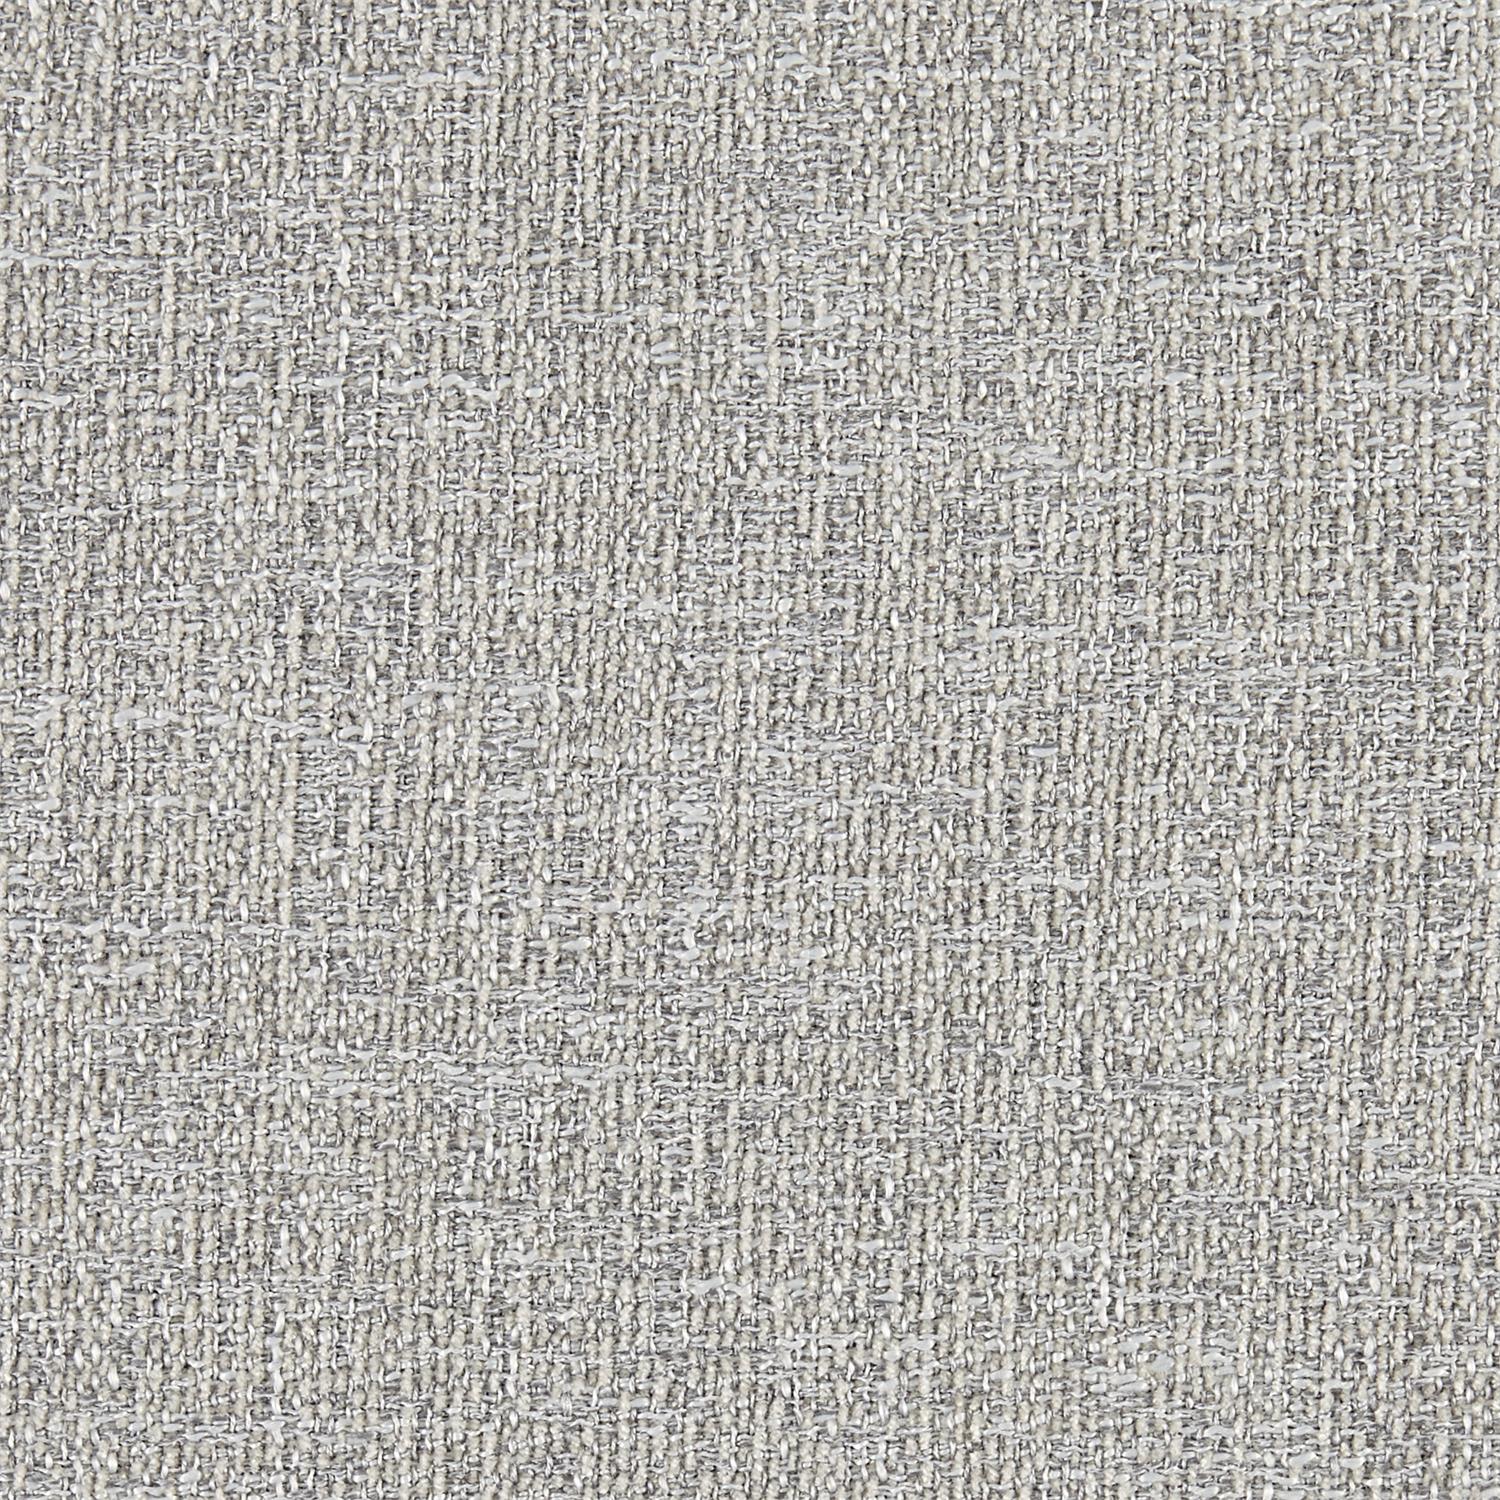 B697-010 Fabric